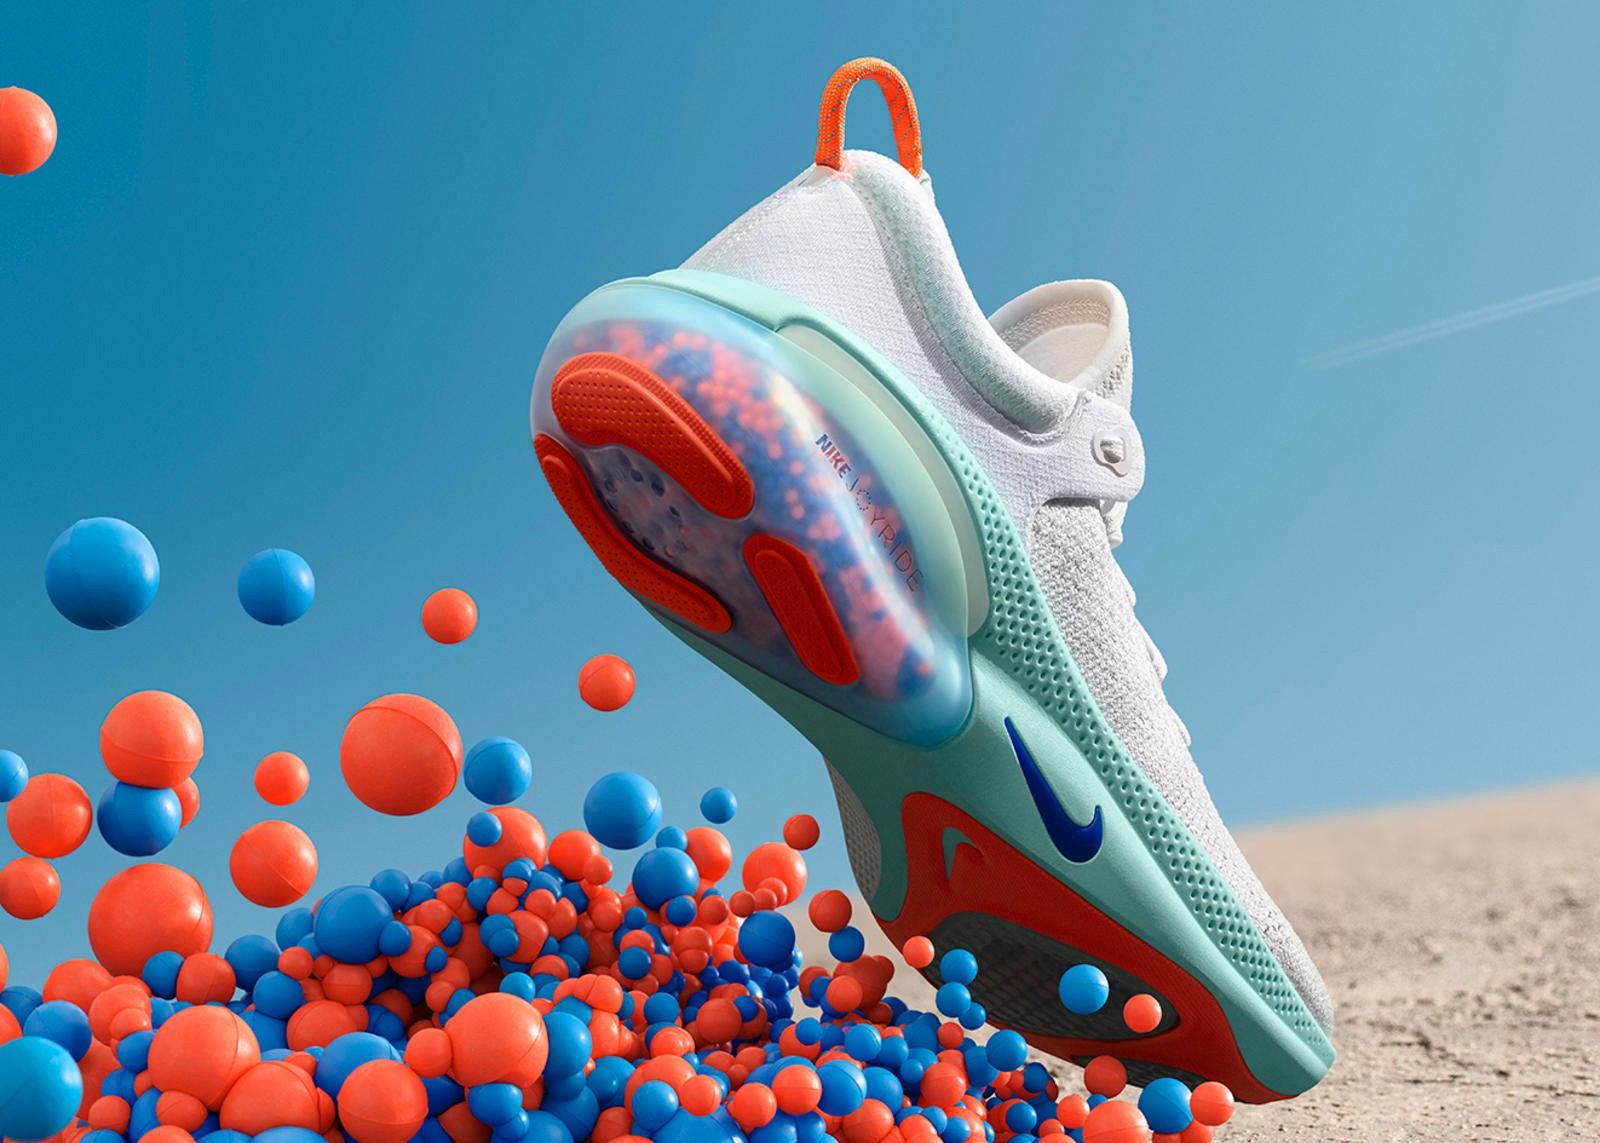 Beneficiario Por Abrumar Nike Receives Flack for Plastic Pollution After Joyride Revealed - 24Hip-Hop